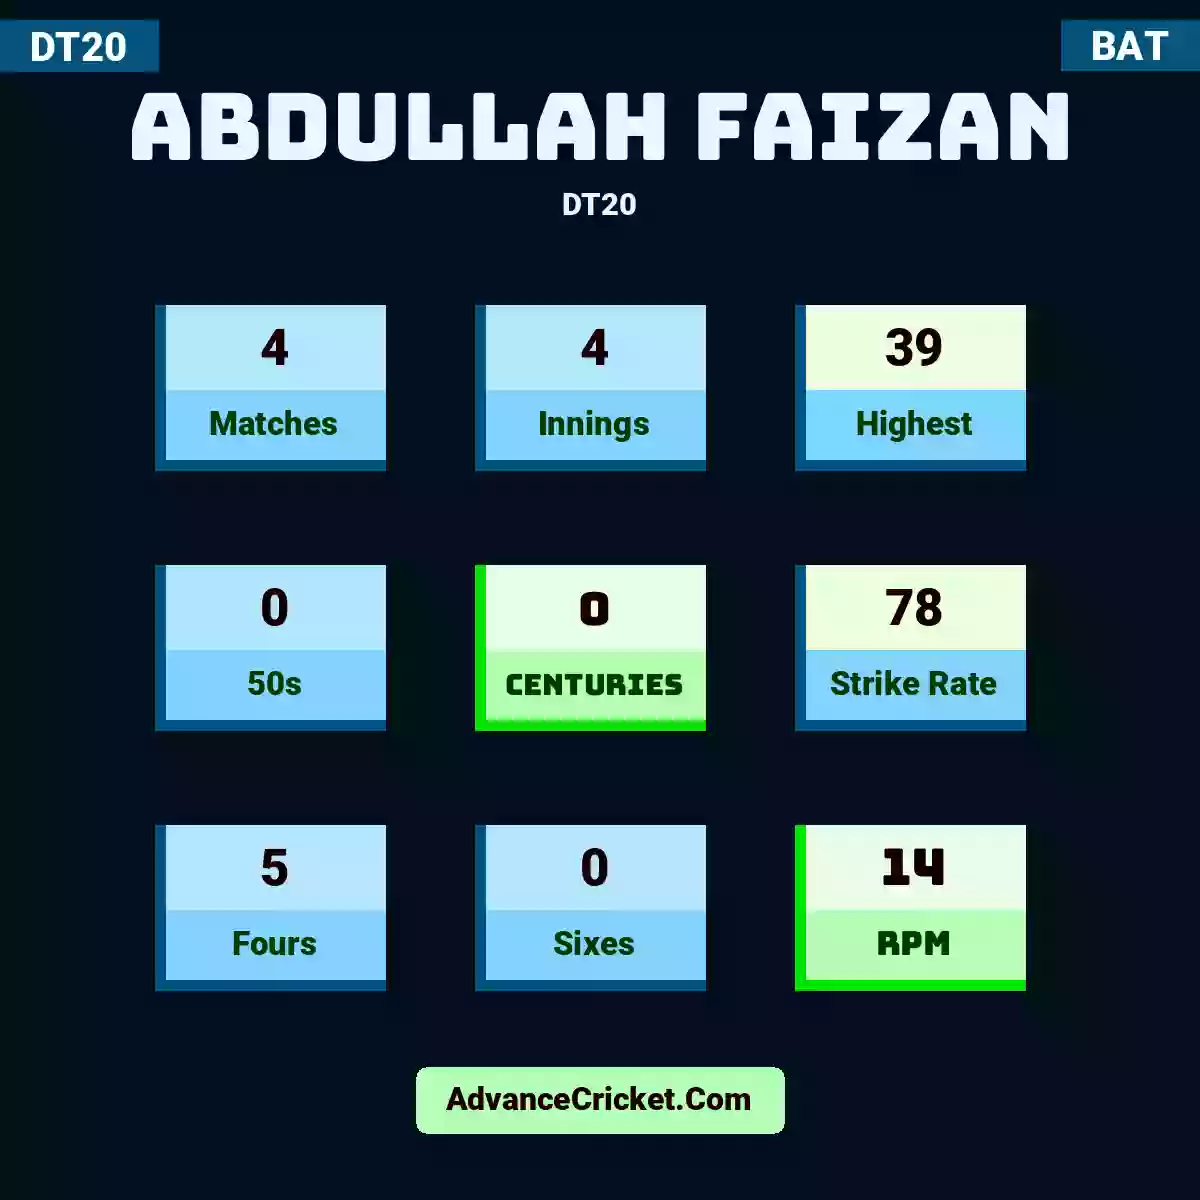 Abdullah Faizan DT20 , Abdullah Faizan played 4 matches, scored 39 runs as highest, 0 half-centuries, and 0 centuries, with a strike rate of 78. A.Faizan hit 5 fours and 0 sixes, with an RPM of 14.